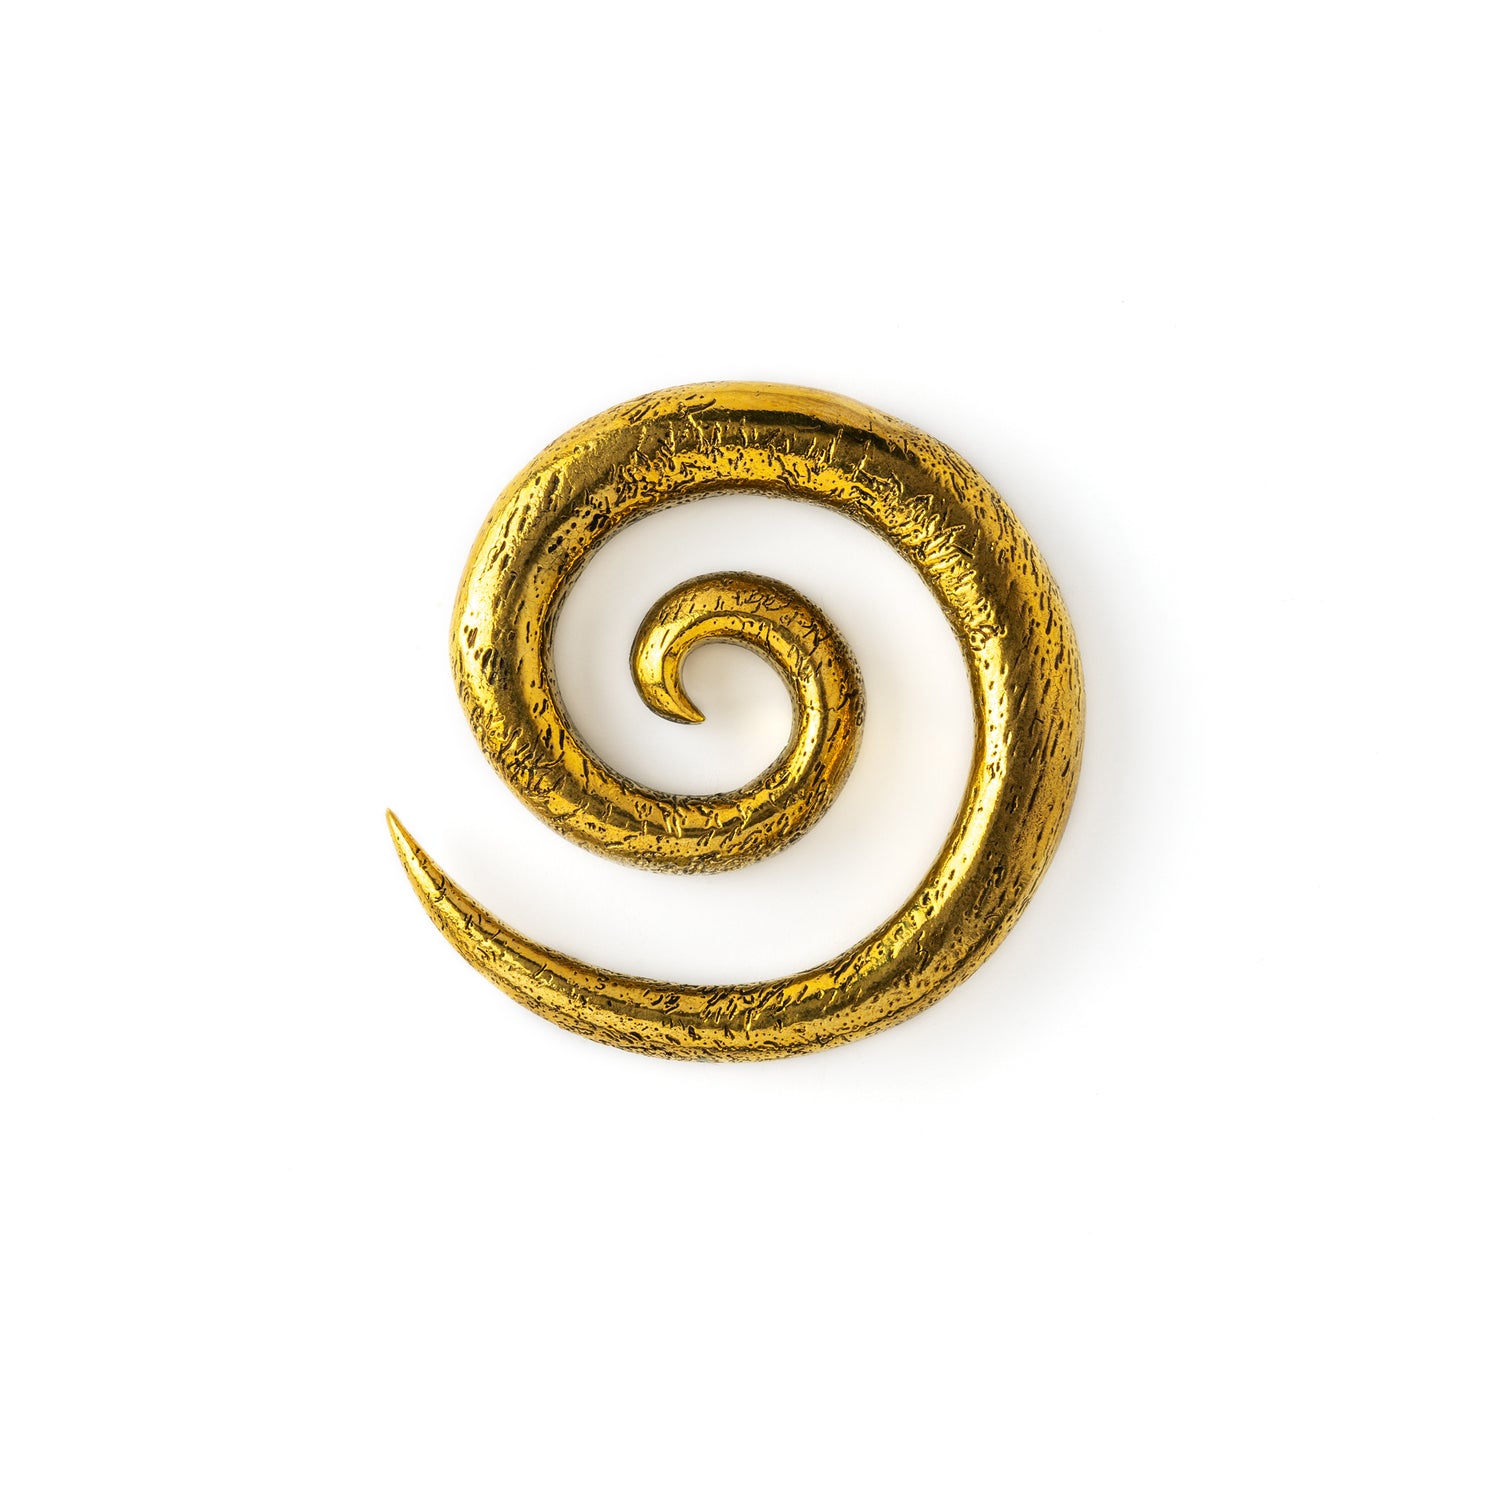 single golden brass spiral ear wight hanger frontal view